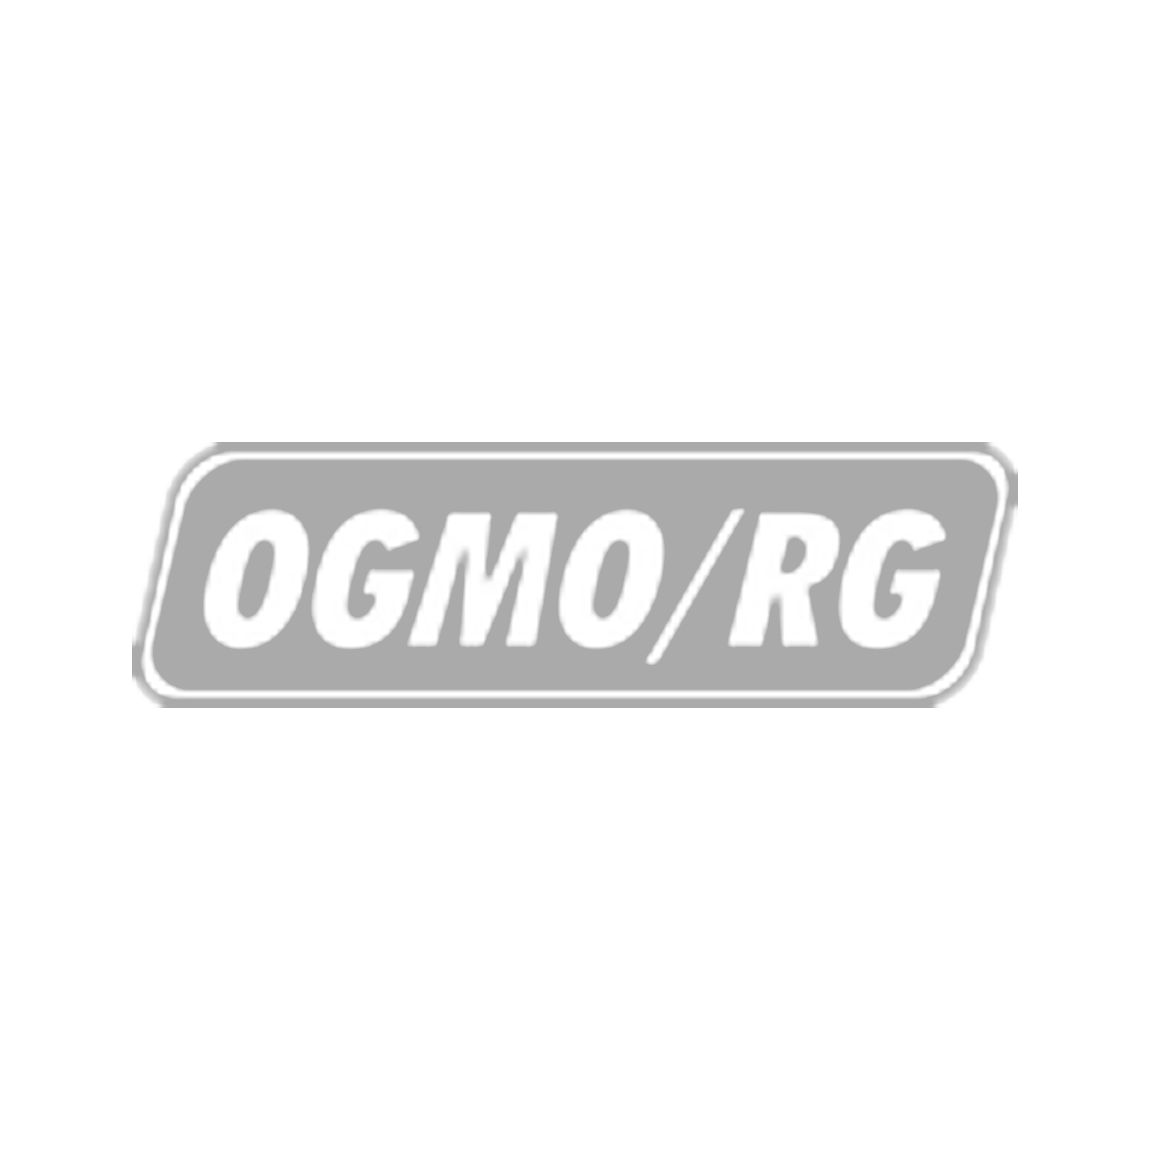 OGMO/RG